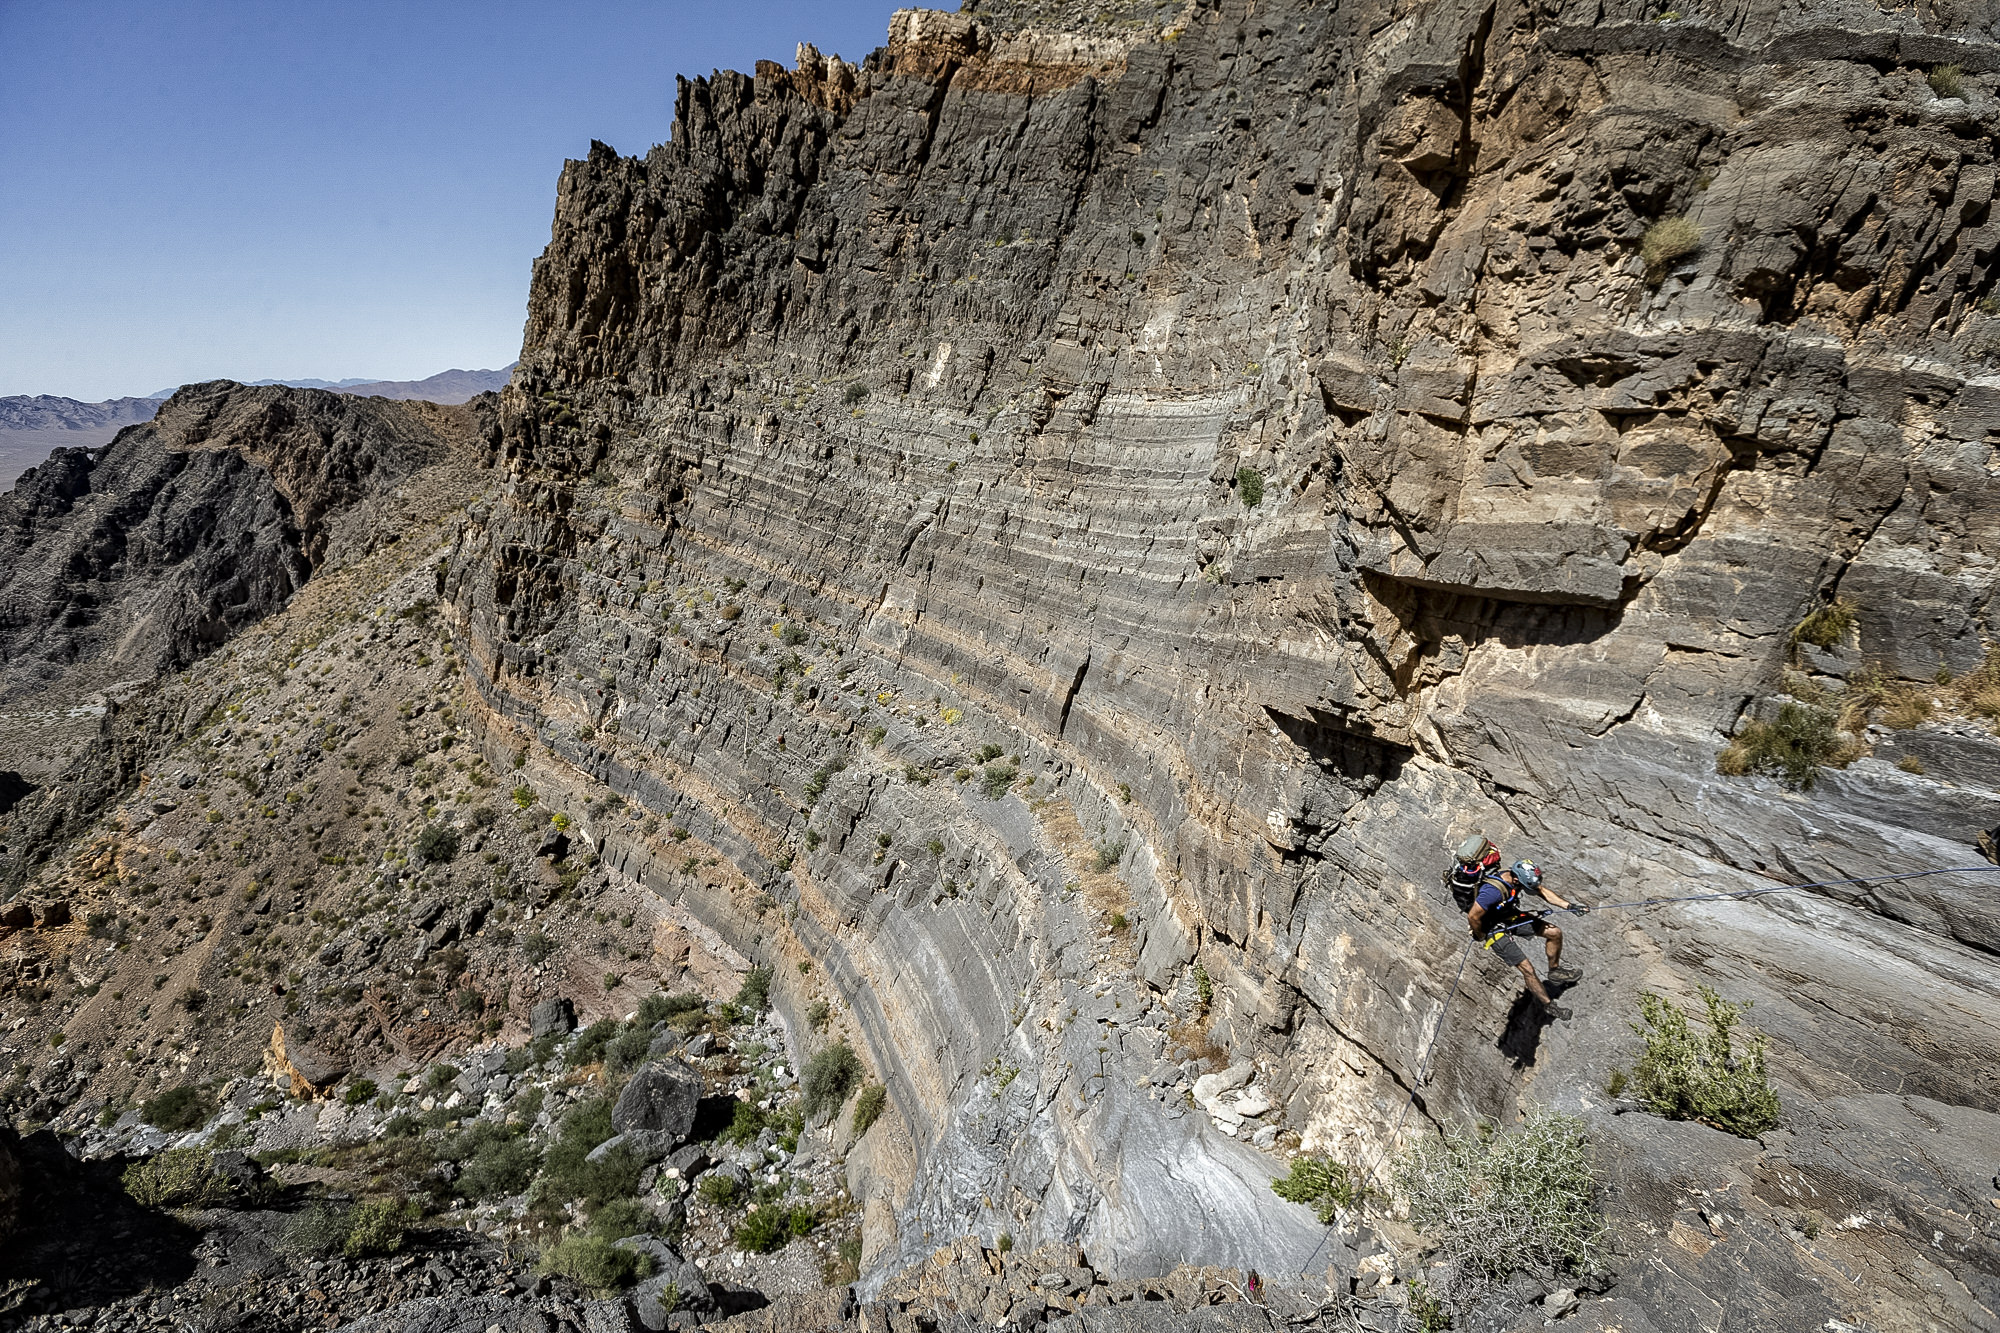 Atlas Canyon, Nopah Range, California. Canon 1Dx, 24-70mm lens set to 26mm, f/22 at 1/80 sec, ISO 400